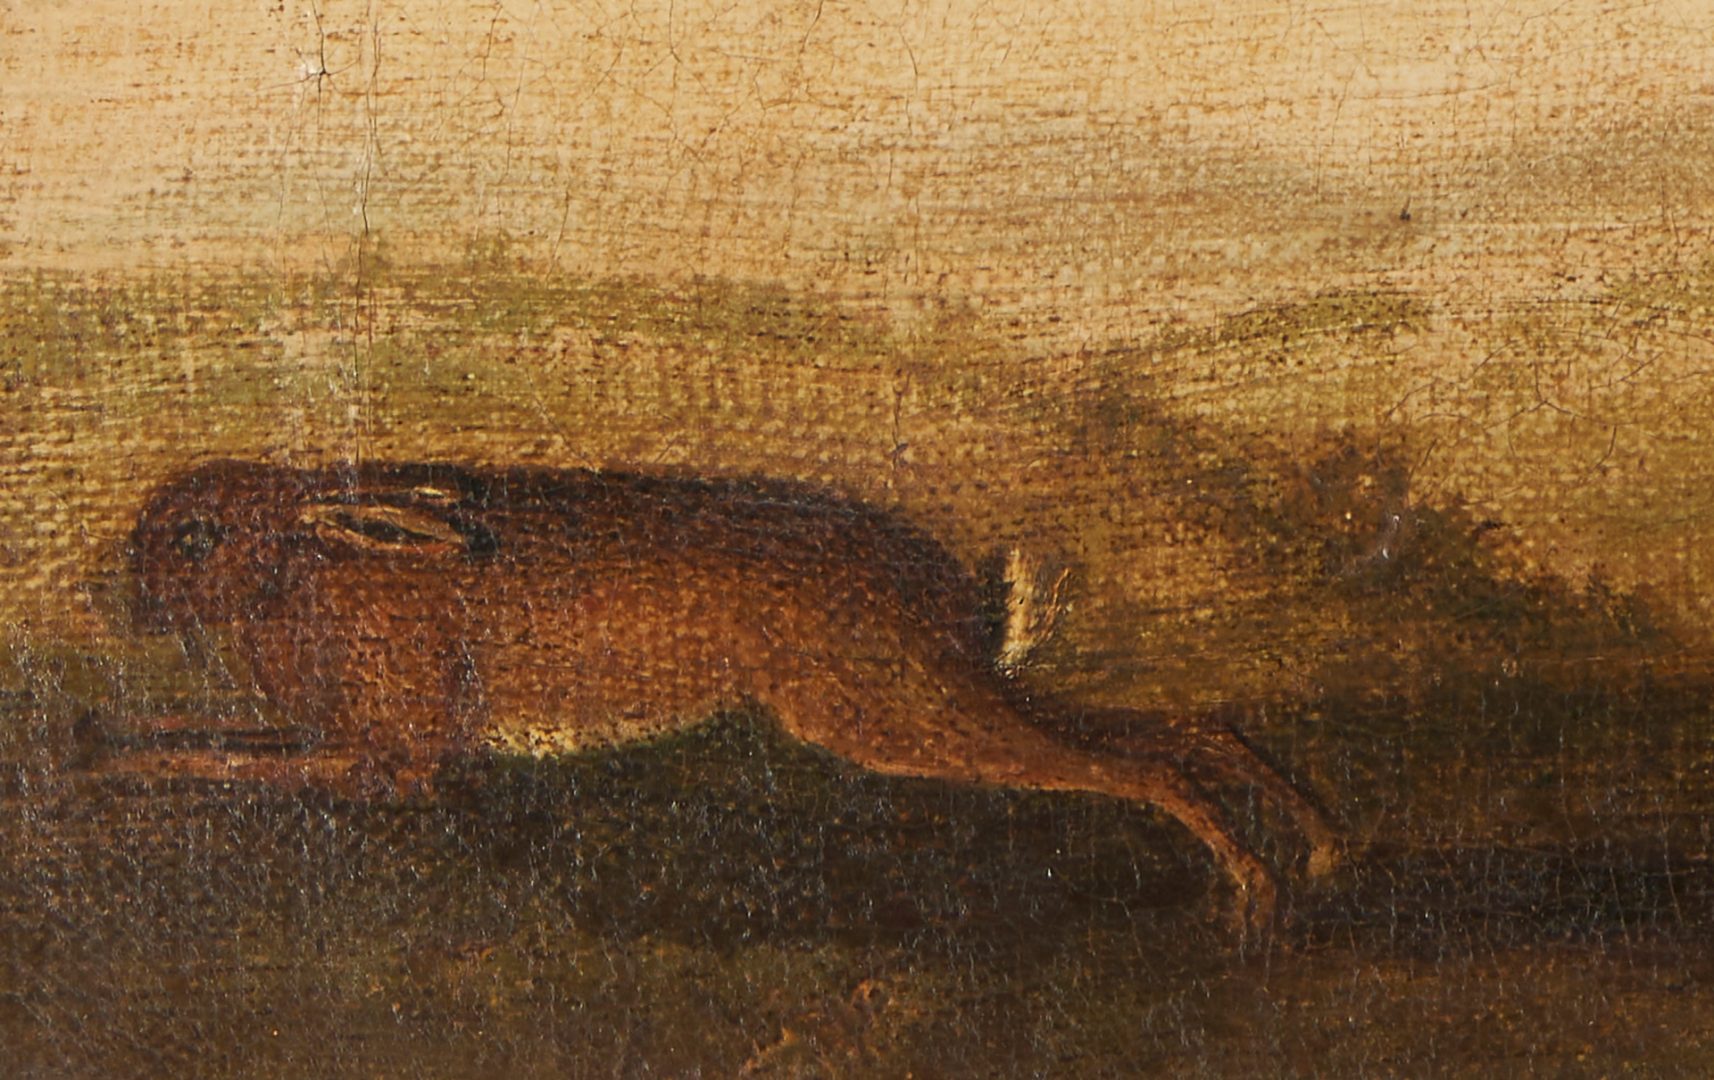 Lot 155: Baroque Hunt Scene Painting of Dog Chasing Rabbit